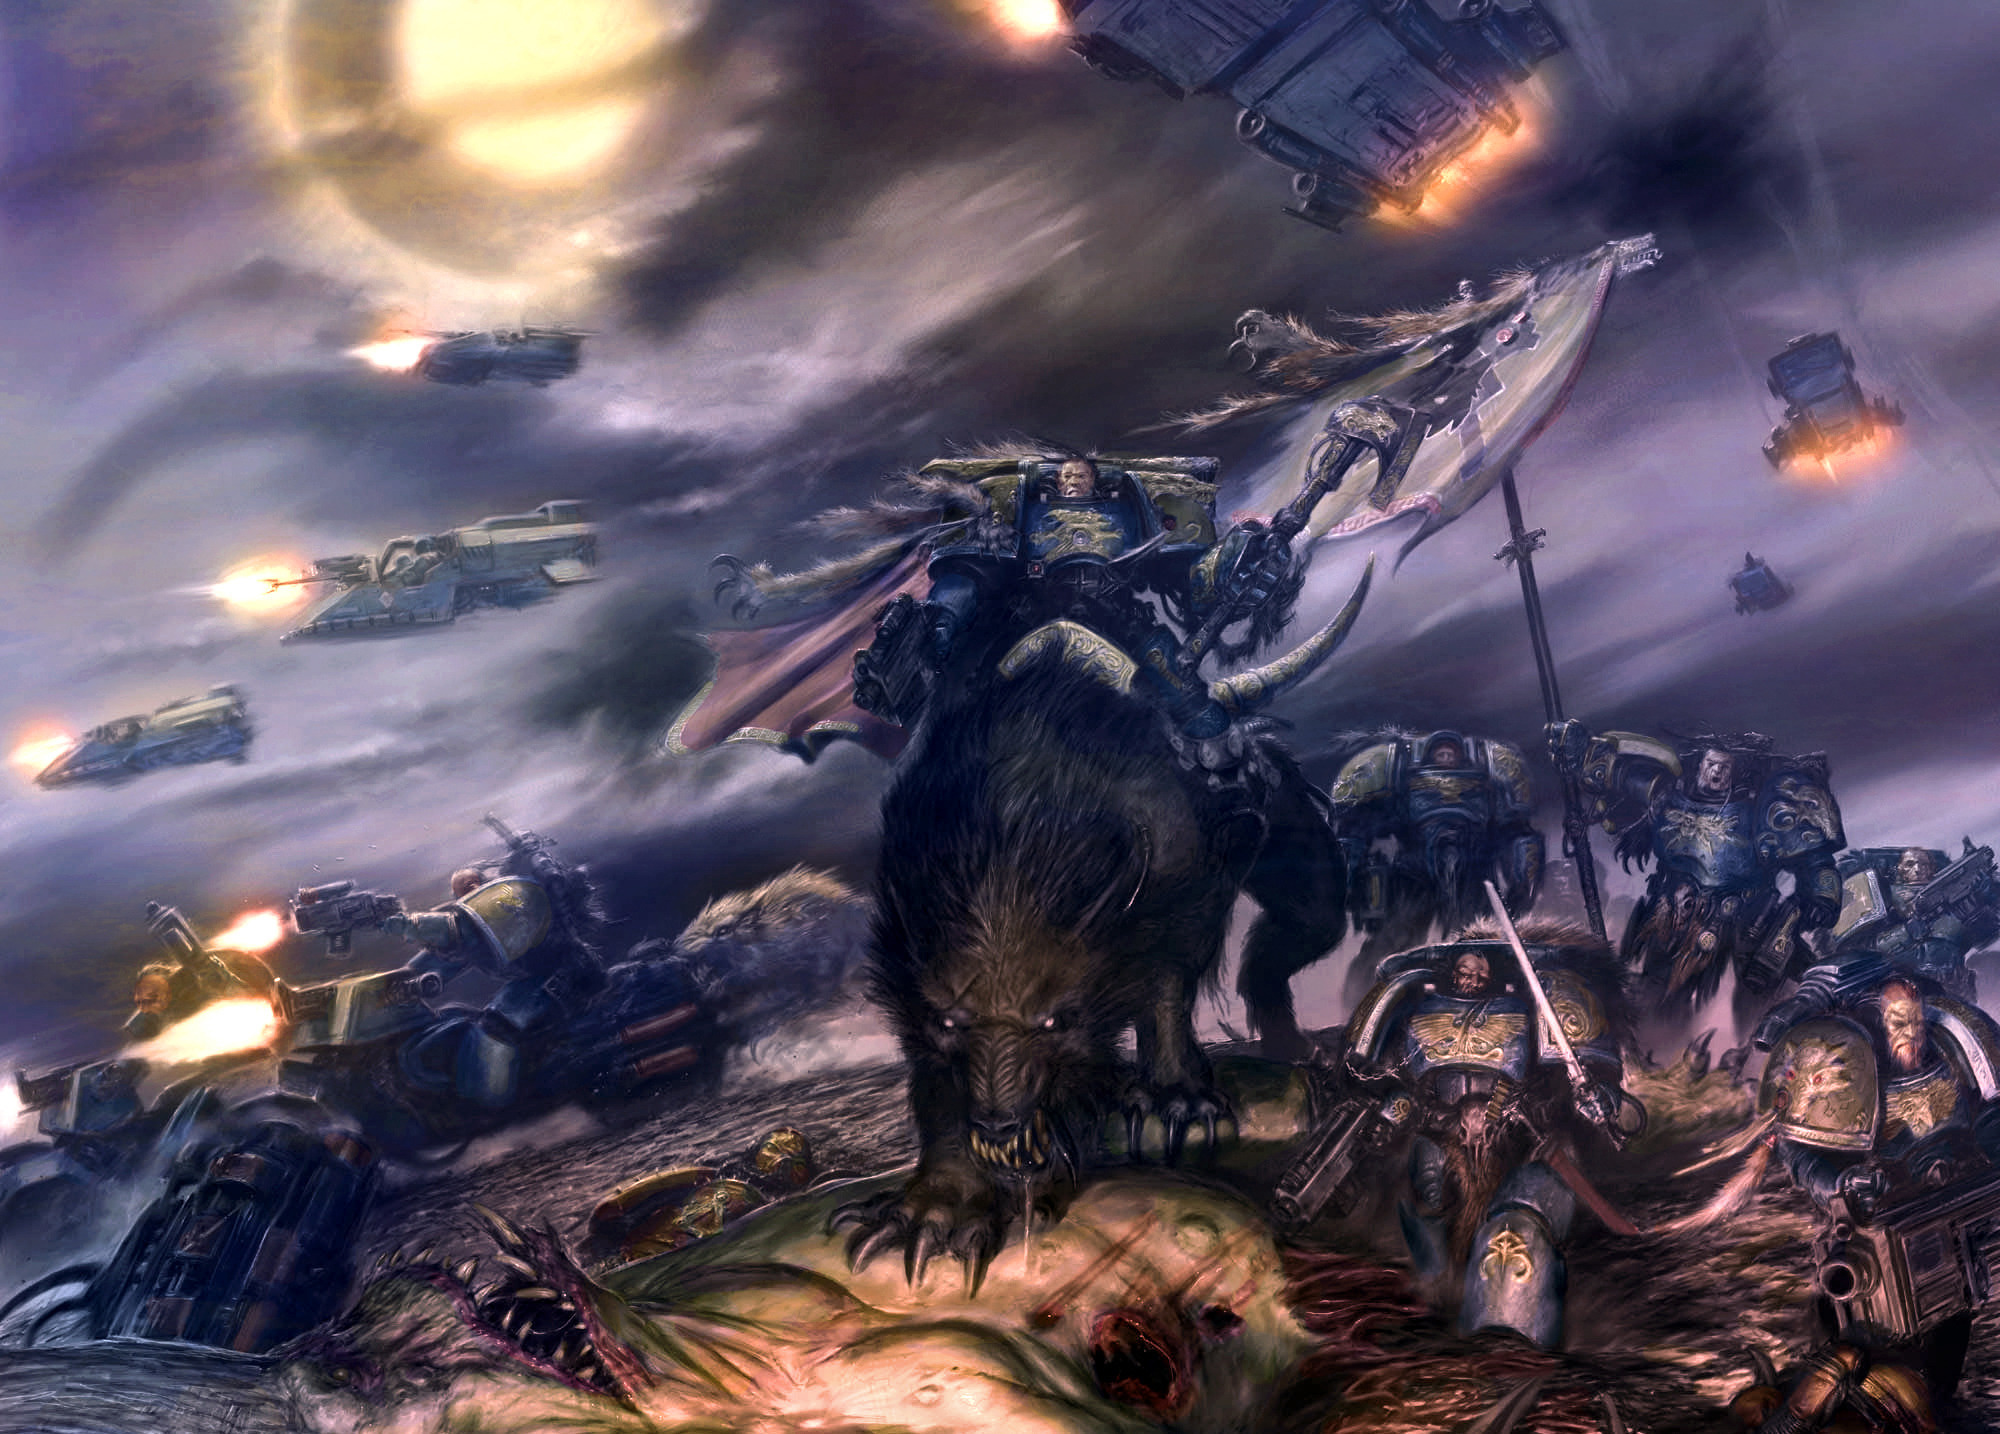 50+] Warhammer 40k Space Wolves Wallpaper - WallpaperSafari